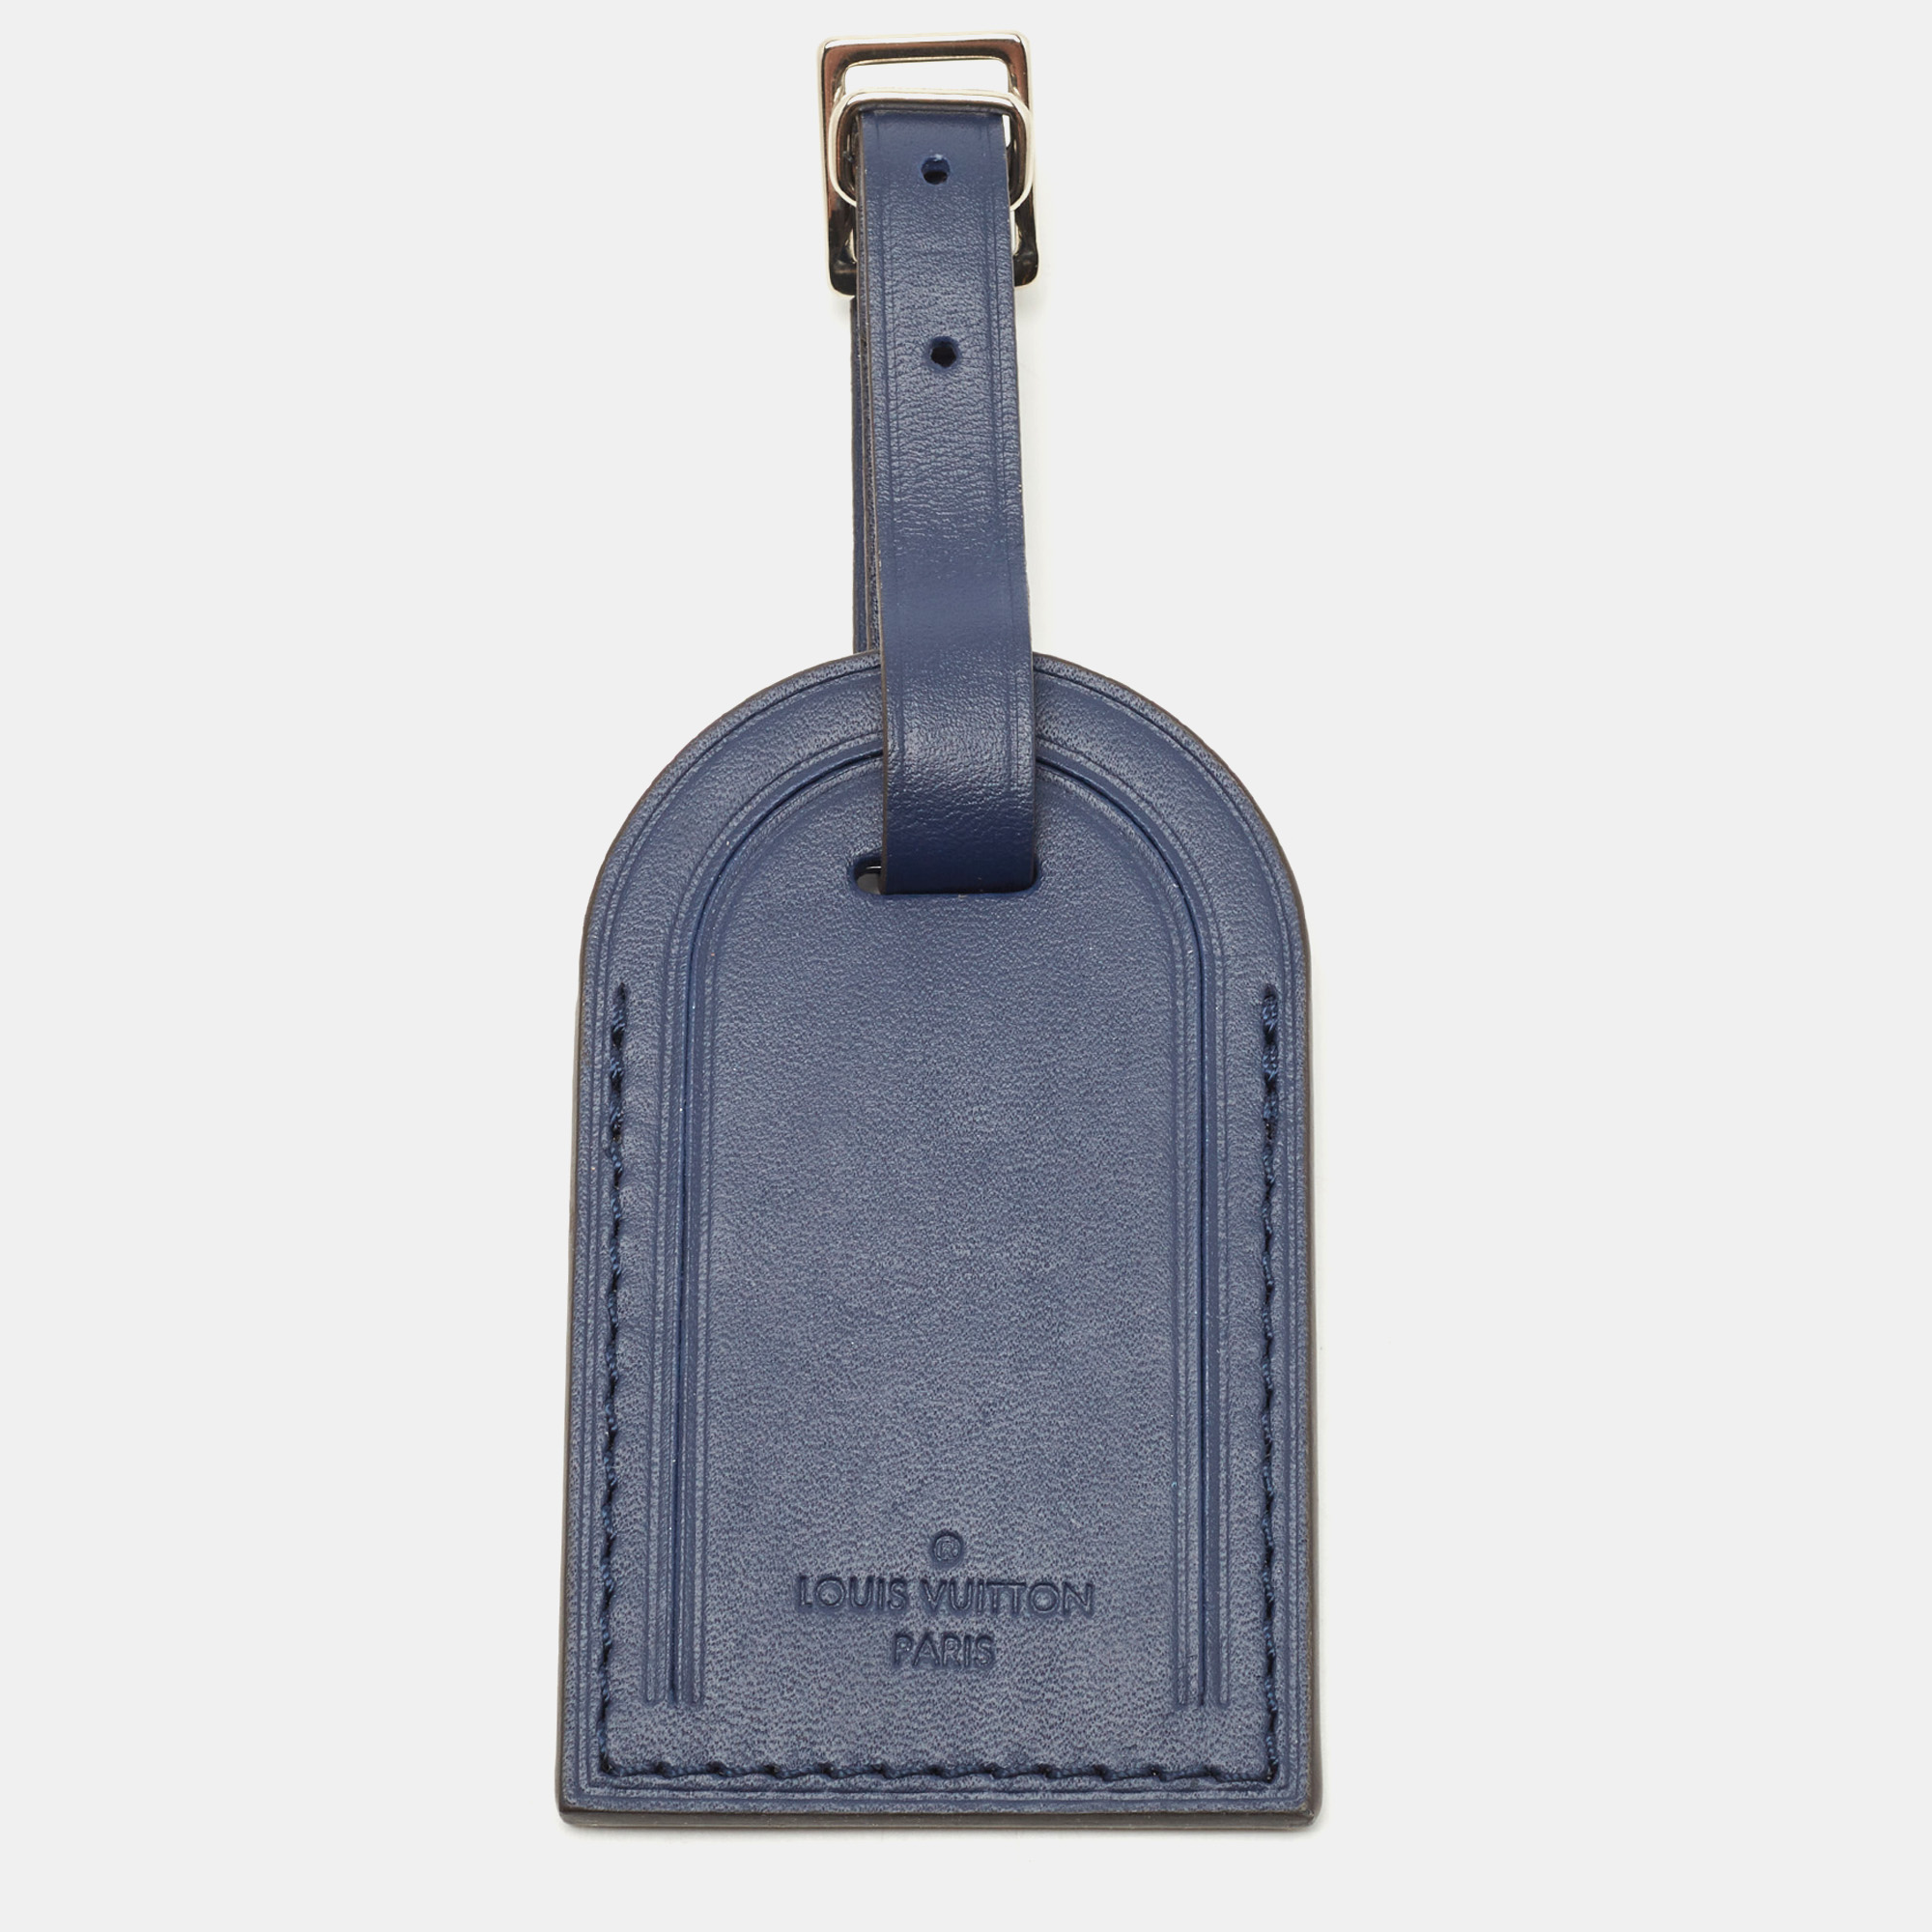 Louis Vuitton Navy Blue Leather Luggage Name Tag